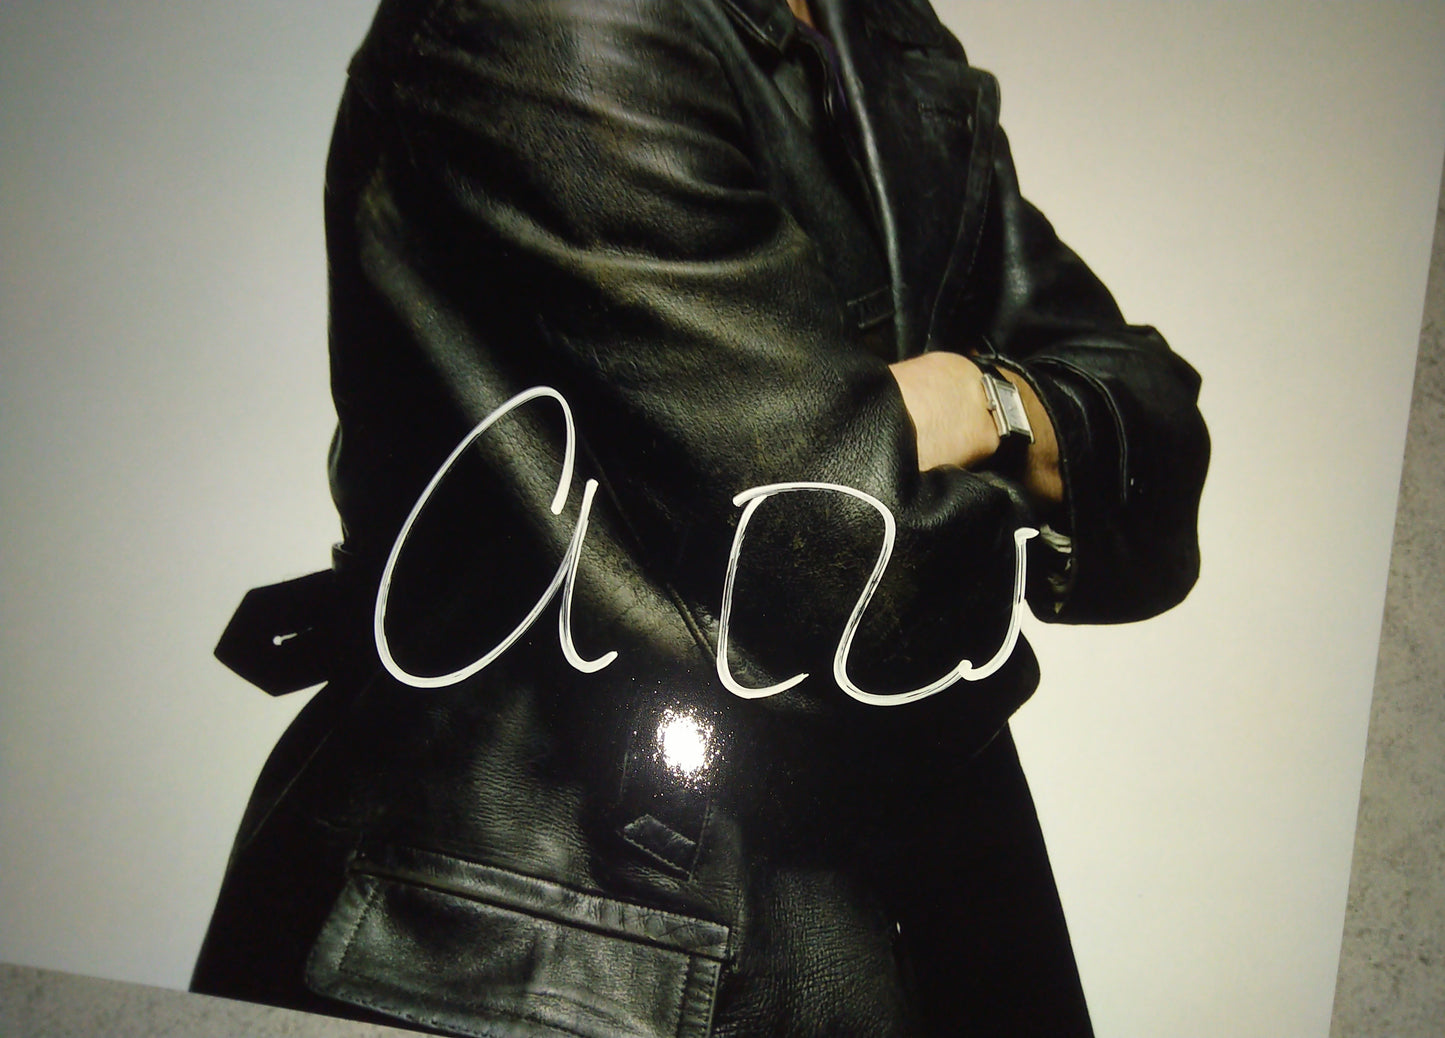 Christopher Eccleston Hand Signed Autograph 8x10 Photo COA